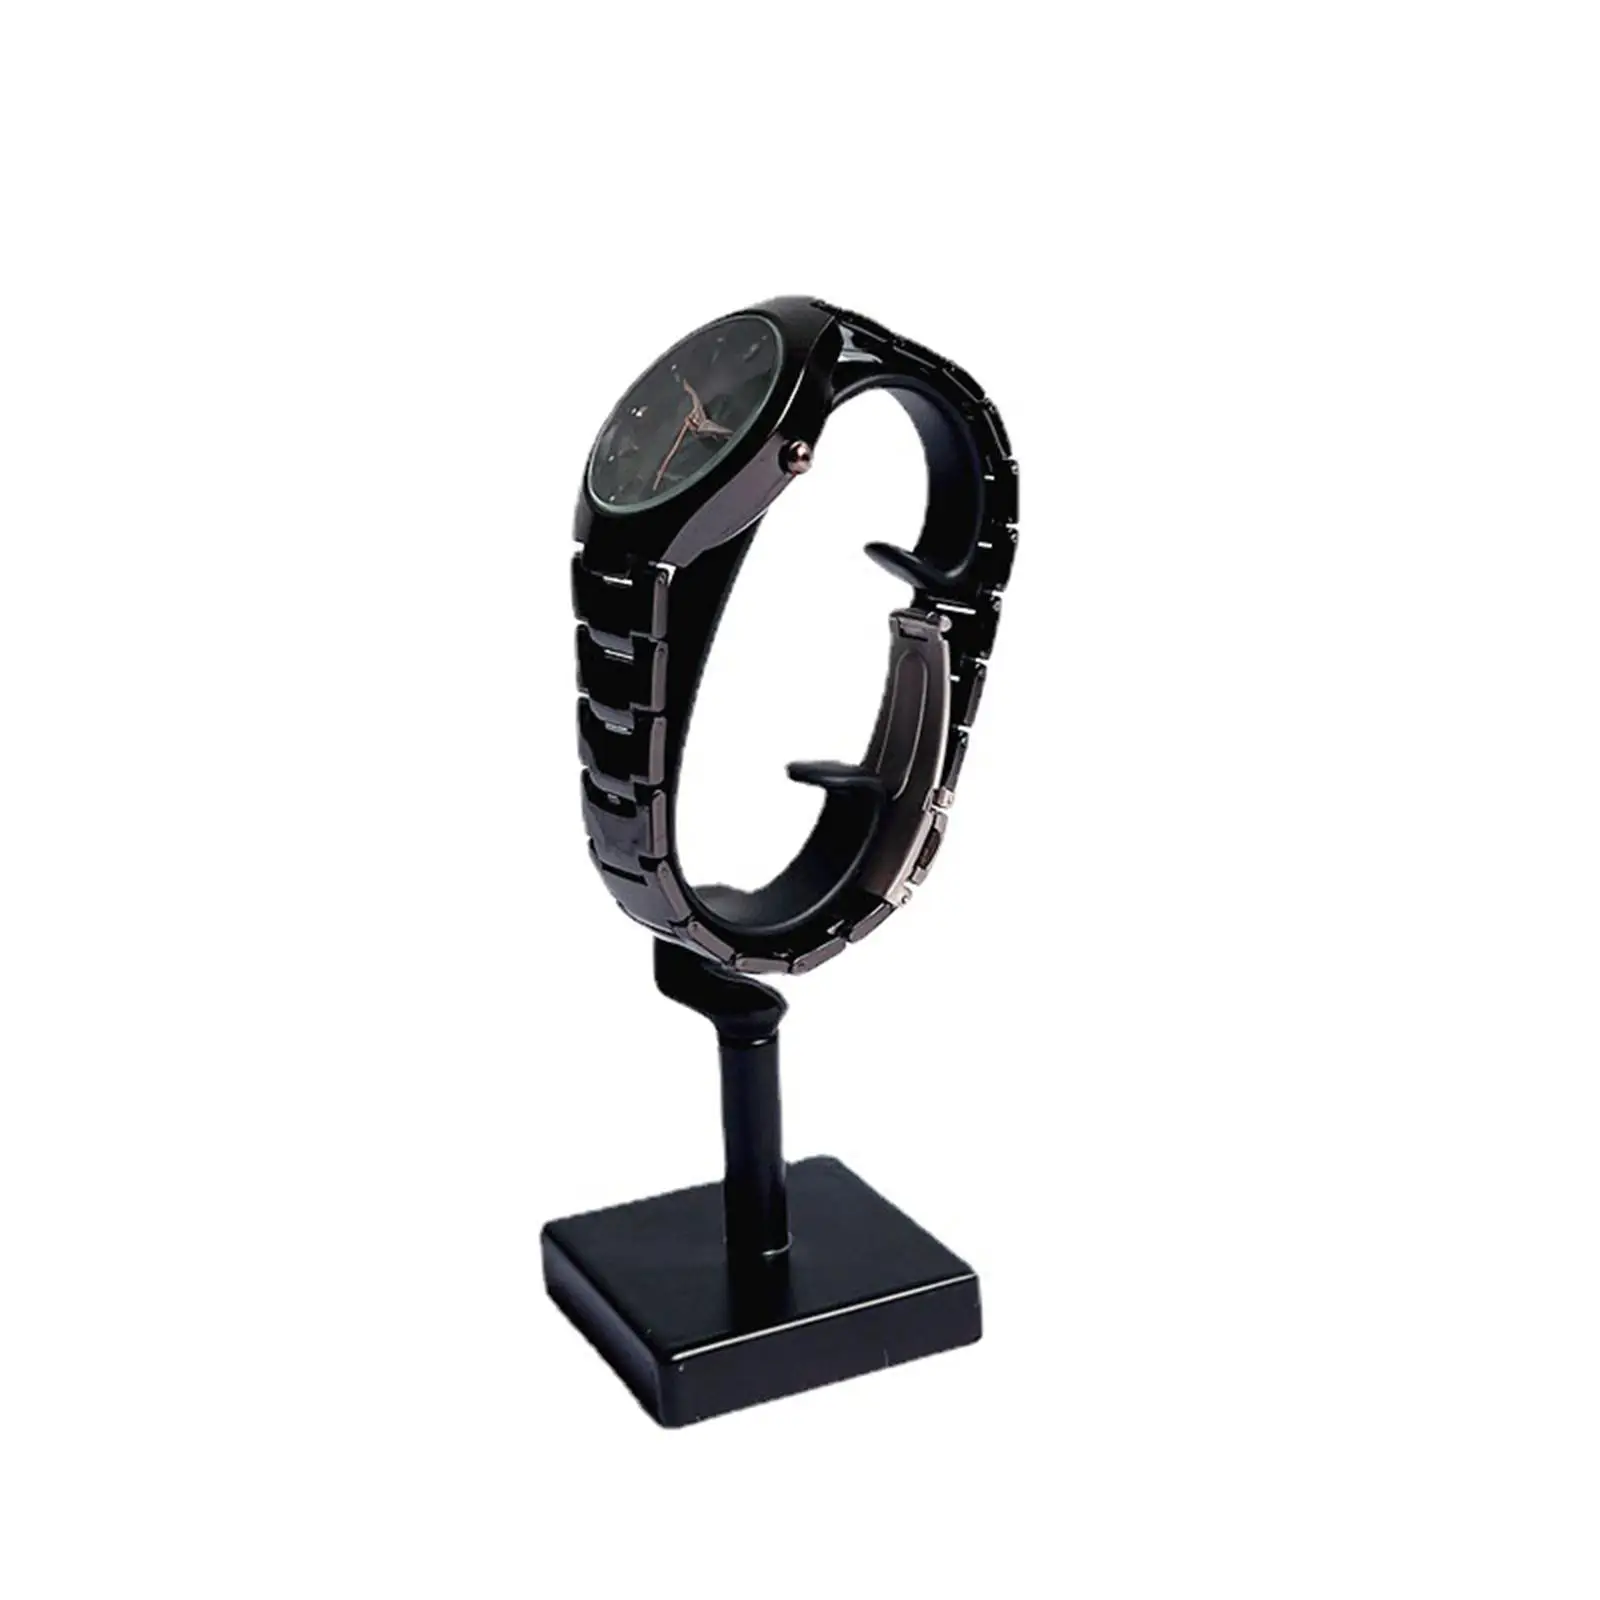 Stable Watch Display Stand Home Decor Freestanding Ornament modern Bracelet Holder for Desktop Showcase Retail Dresser